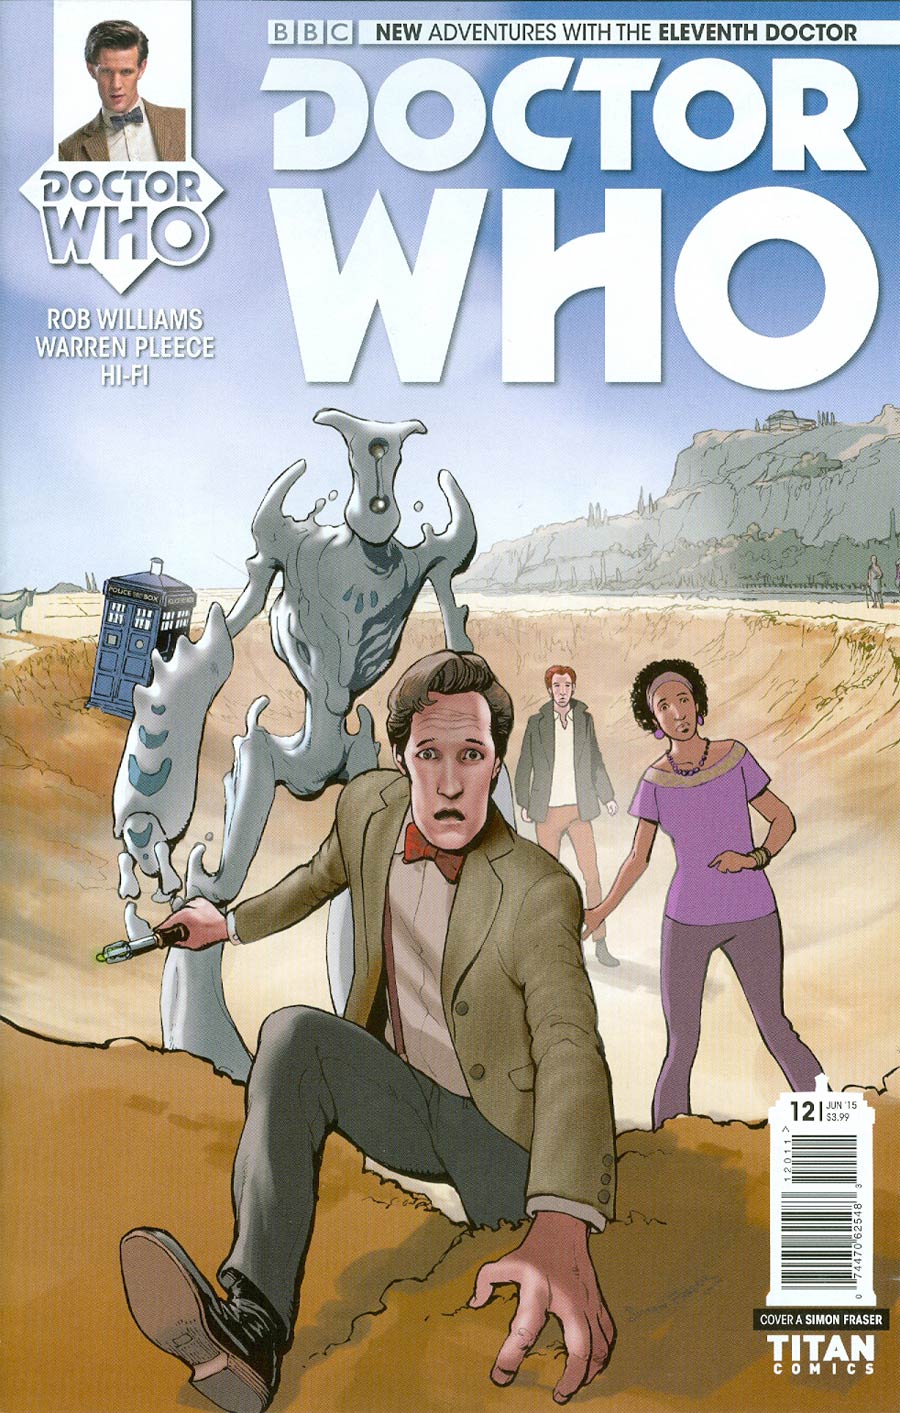 Doctor Who 11th Doctor #12 Cover A Regular Simon Fraser Cover